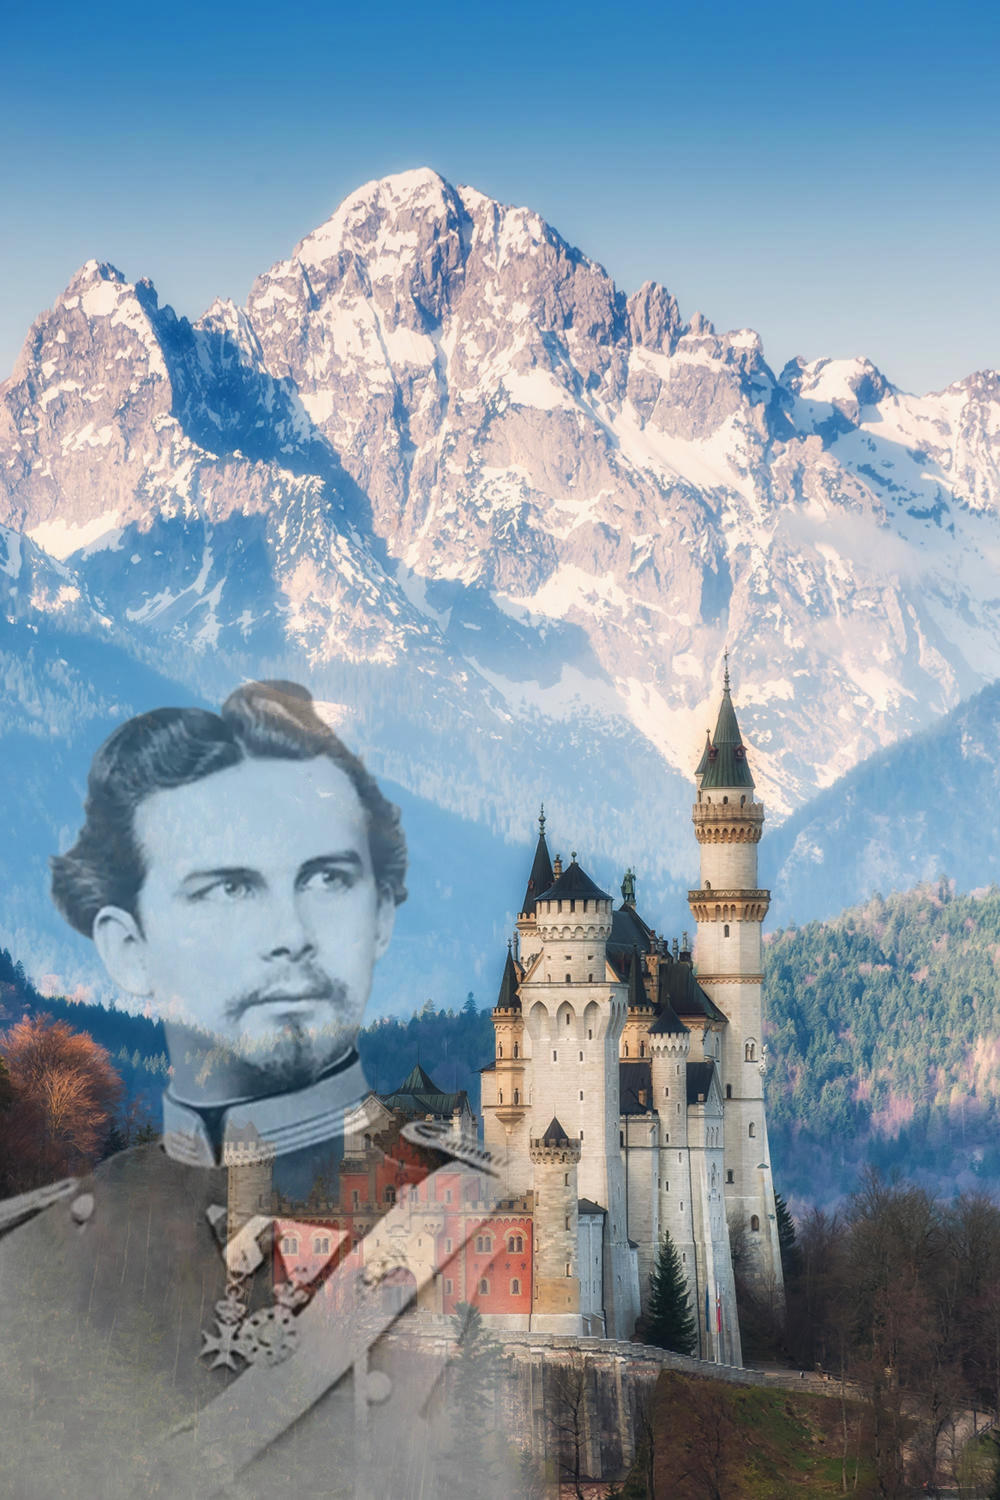 Castle Neuschwanstein against the Bavarian Alps, Germany. Derivative works based on photo by Dmytro Balkhovitin